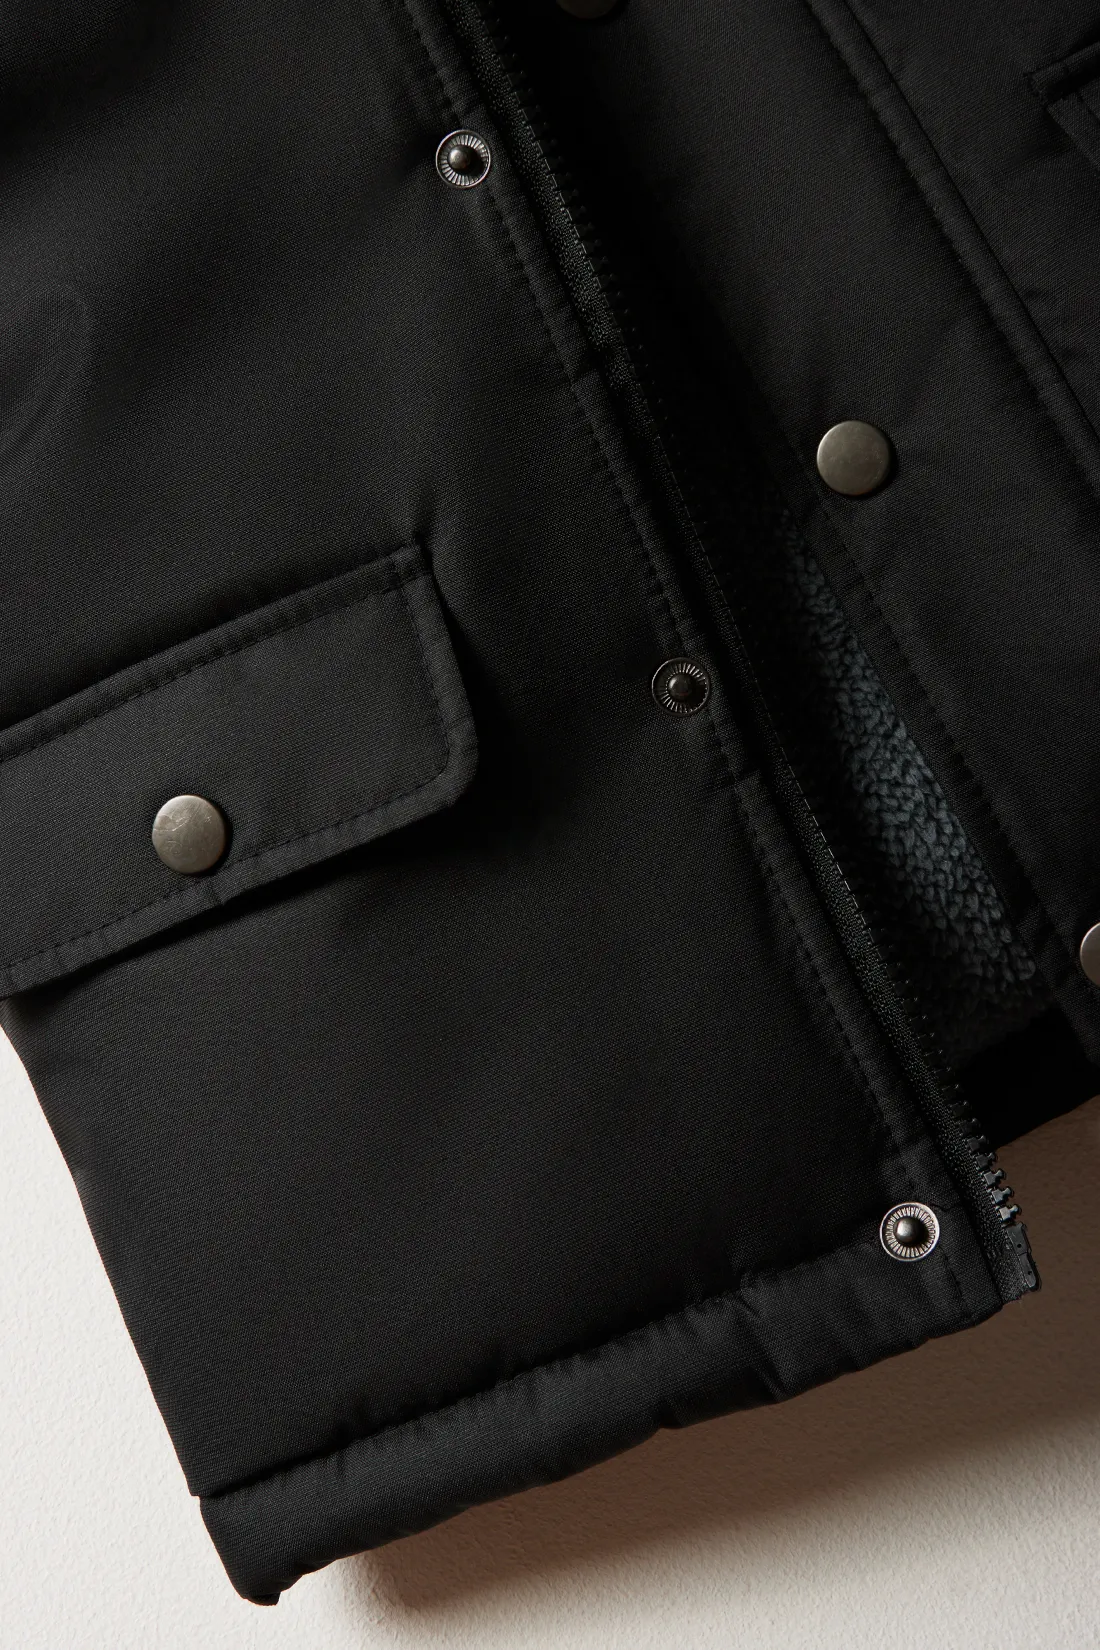 Hooded parka jacket black - BOYS 2-10 YEARS Jackets & Knitwear | Ackermans